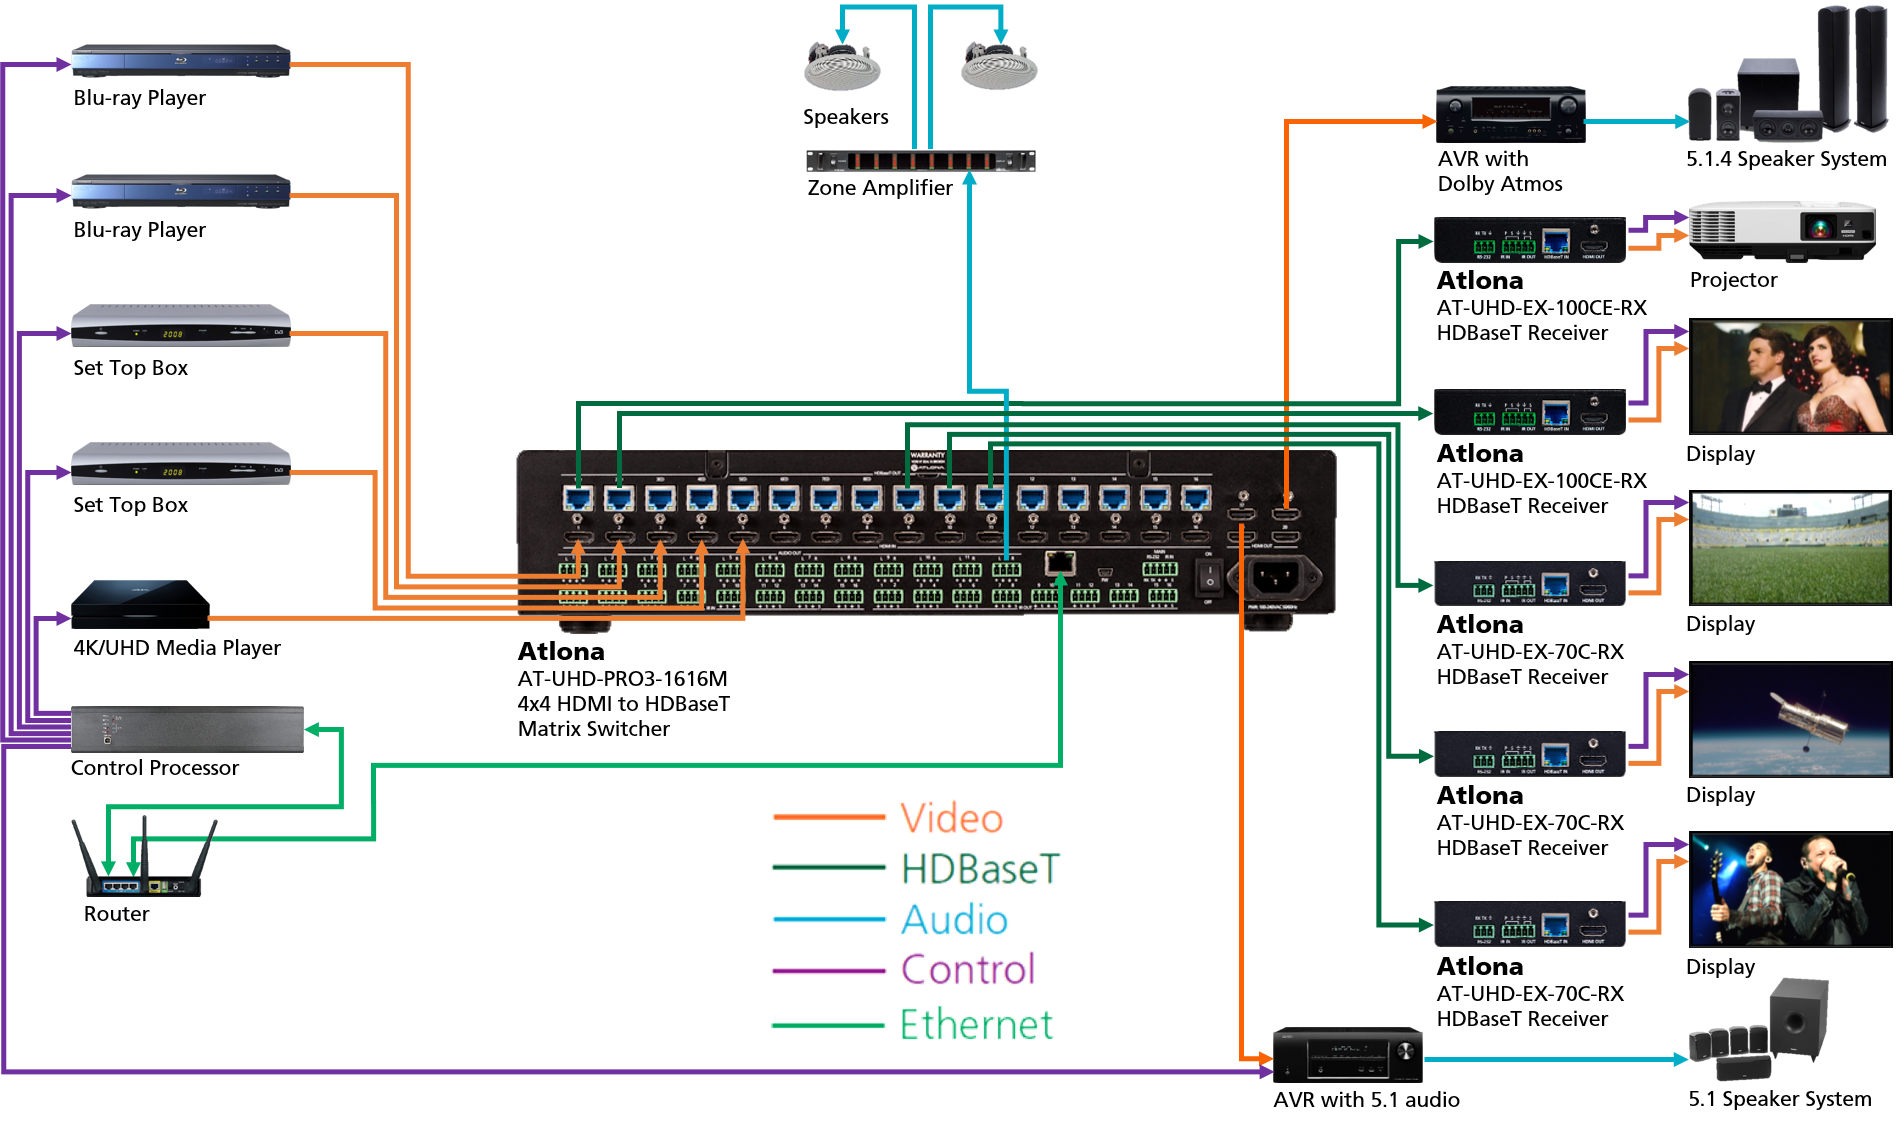 rgbhv 16x16 crestron wiring diagram